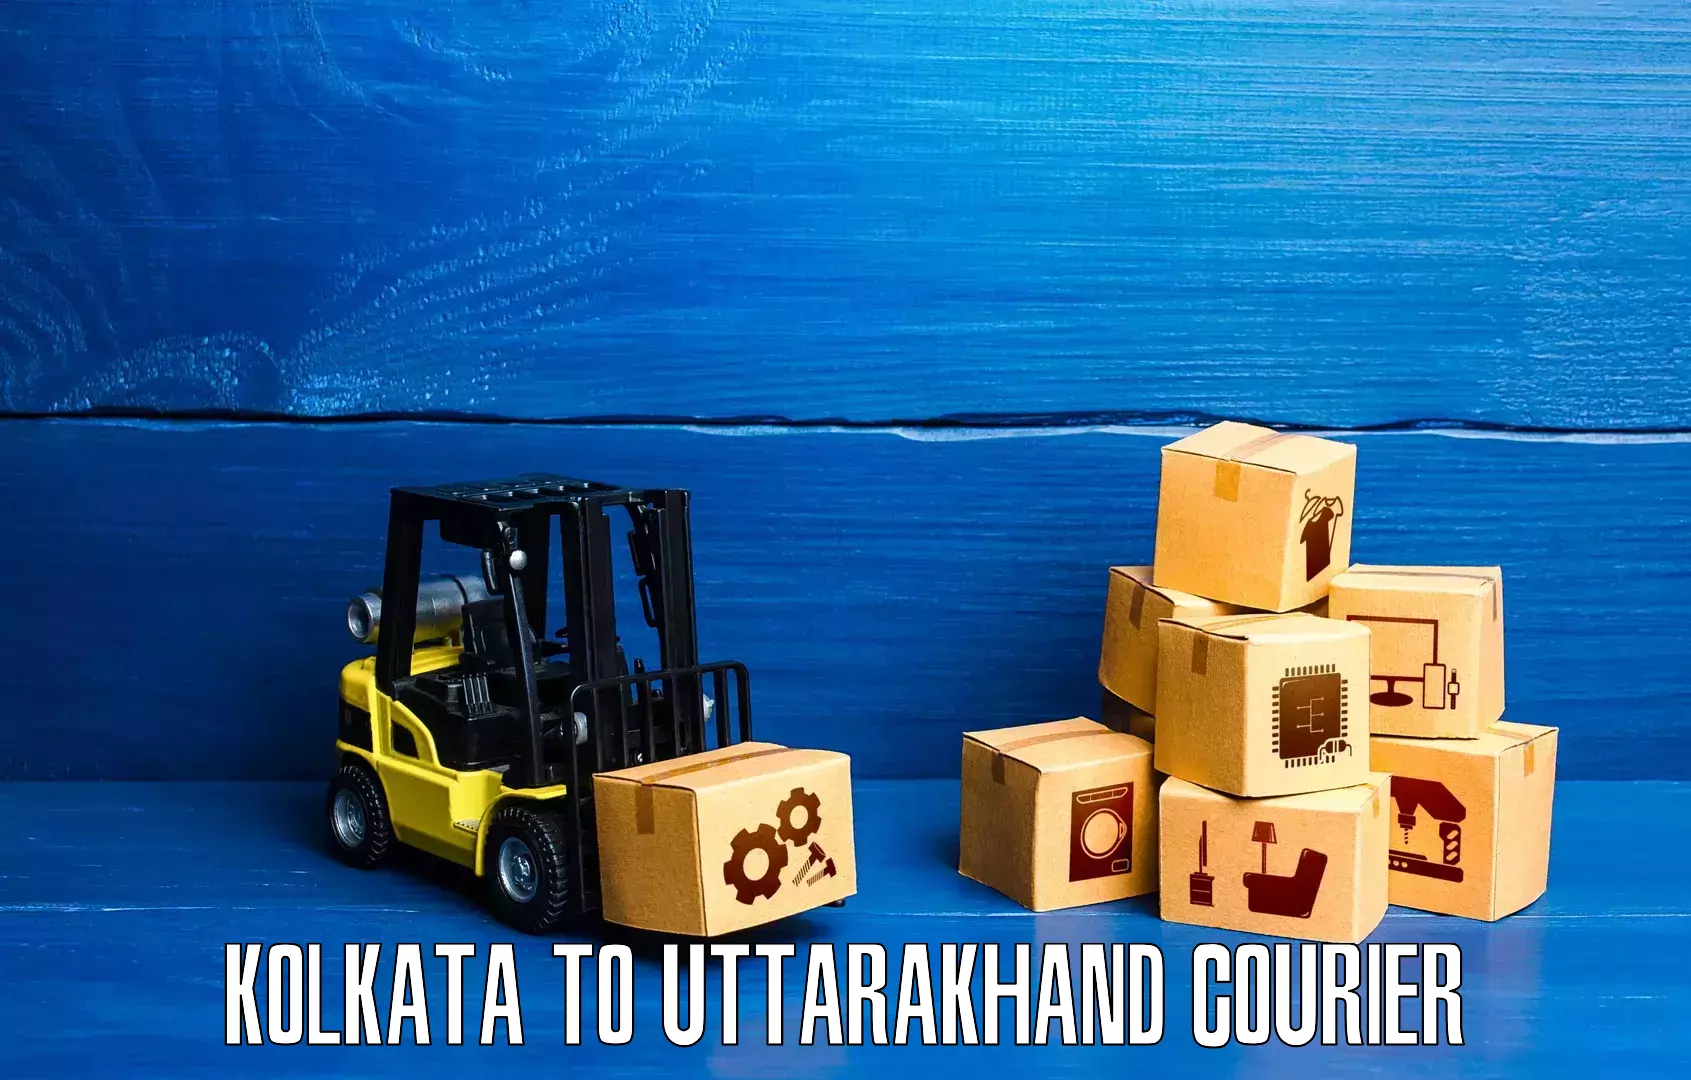 Multi-national courier services Kolkata to Uttarakhand